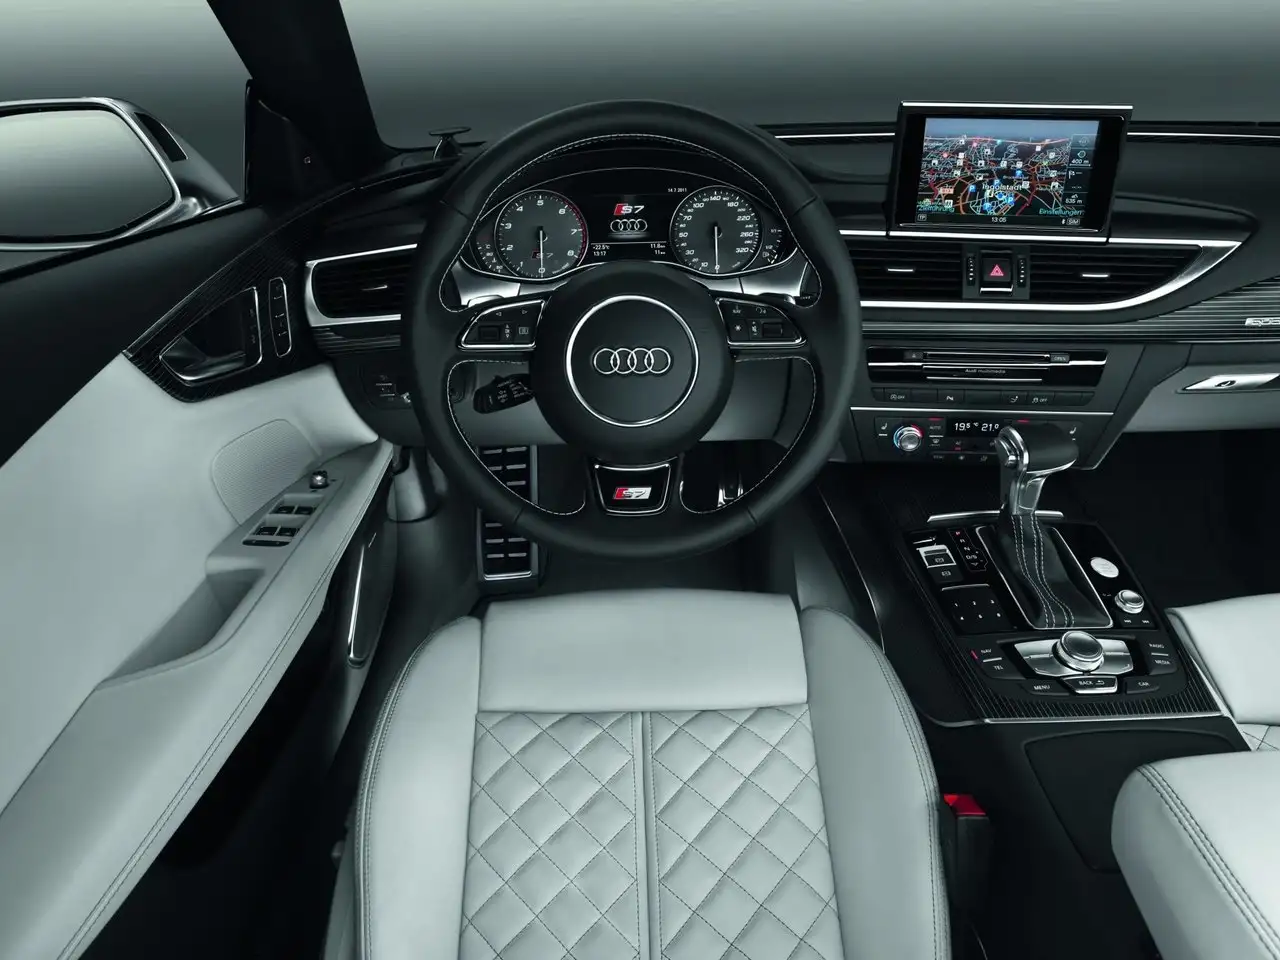 Коврики в салон Audi A7 () (4шт) (Stingray), купить, цена, фото, доставка, хмельницкий